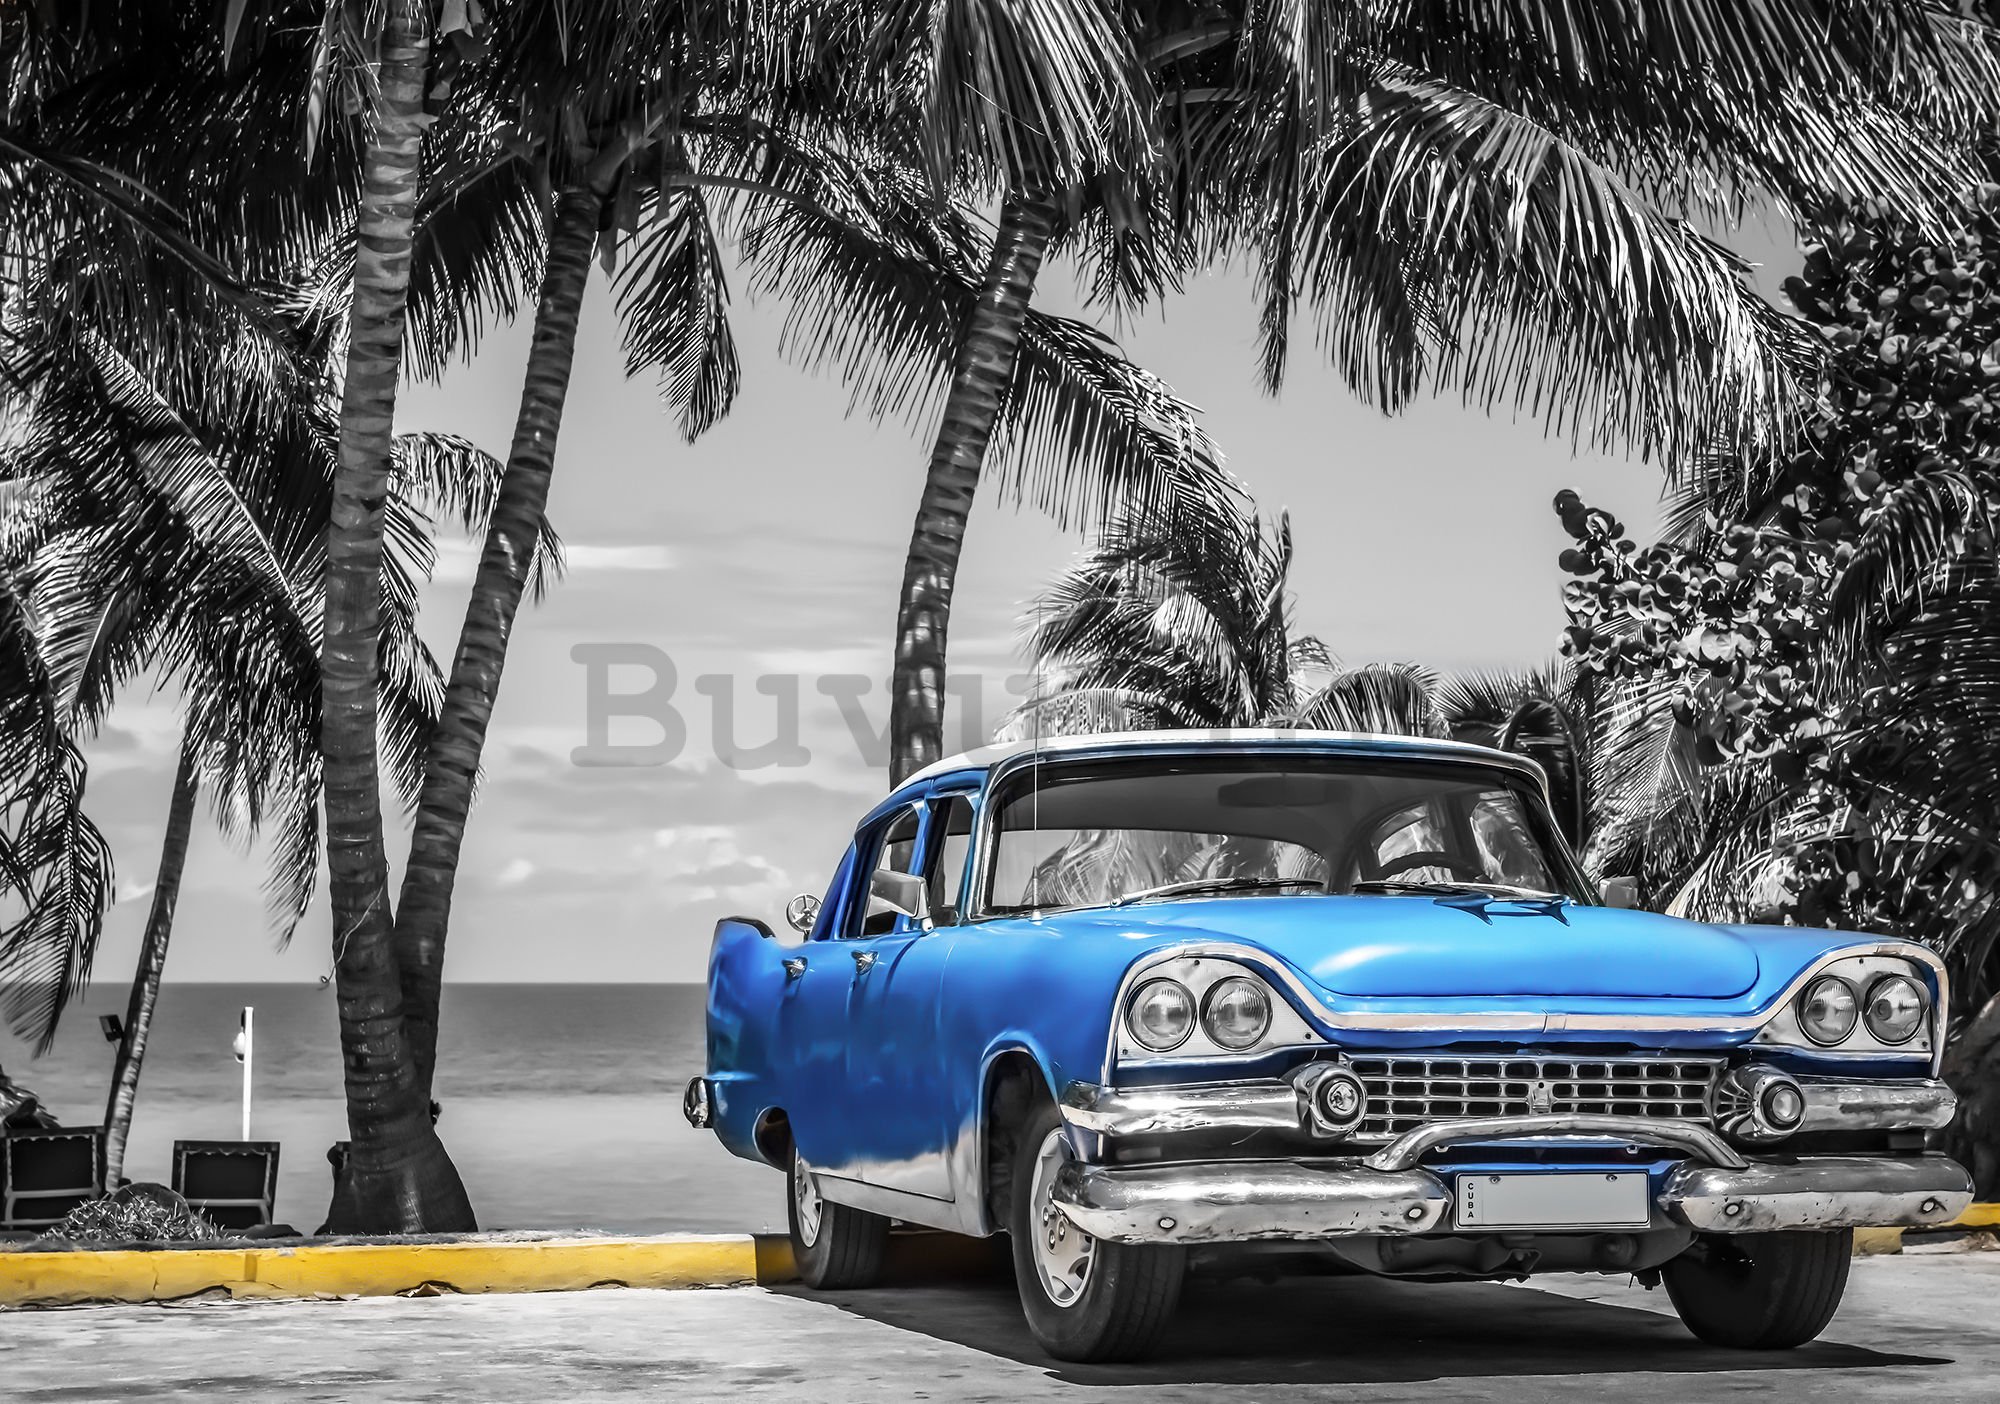 Vlies foto tapeta: Kuba plavi automobil uz more - 416x254 cm